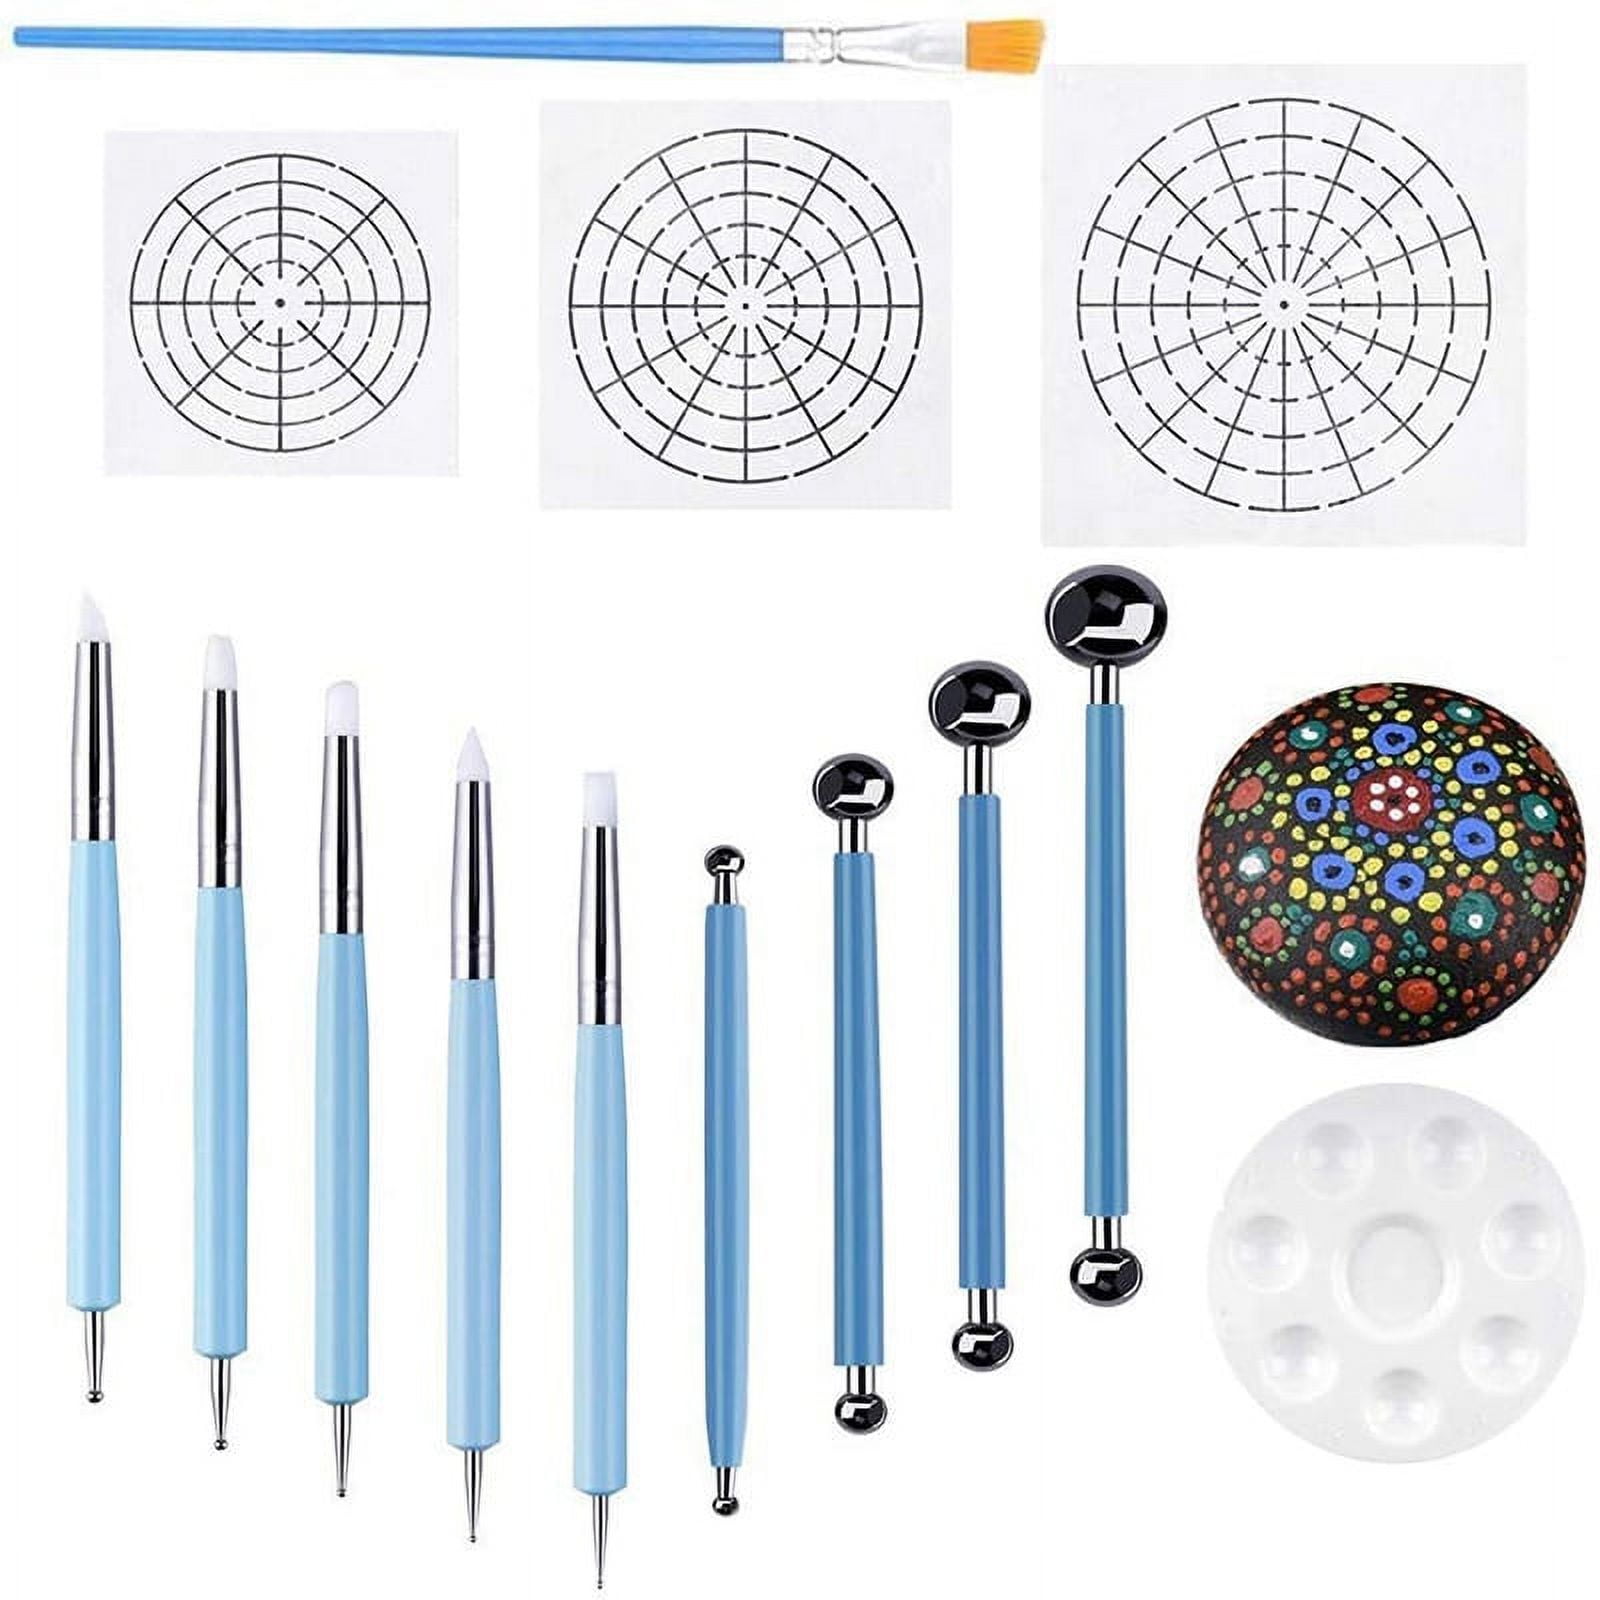 14 Mandala Dotting Stencil Tools Rock Painting Kit Dotting Tools Include Templates, Paint Tray, Mandala Tools, Random Colors